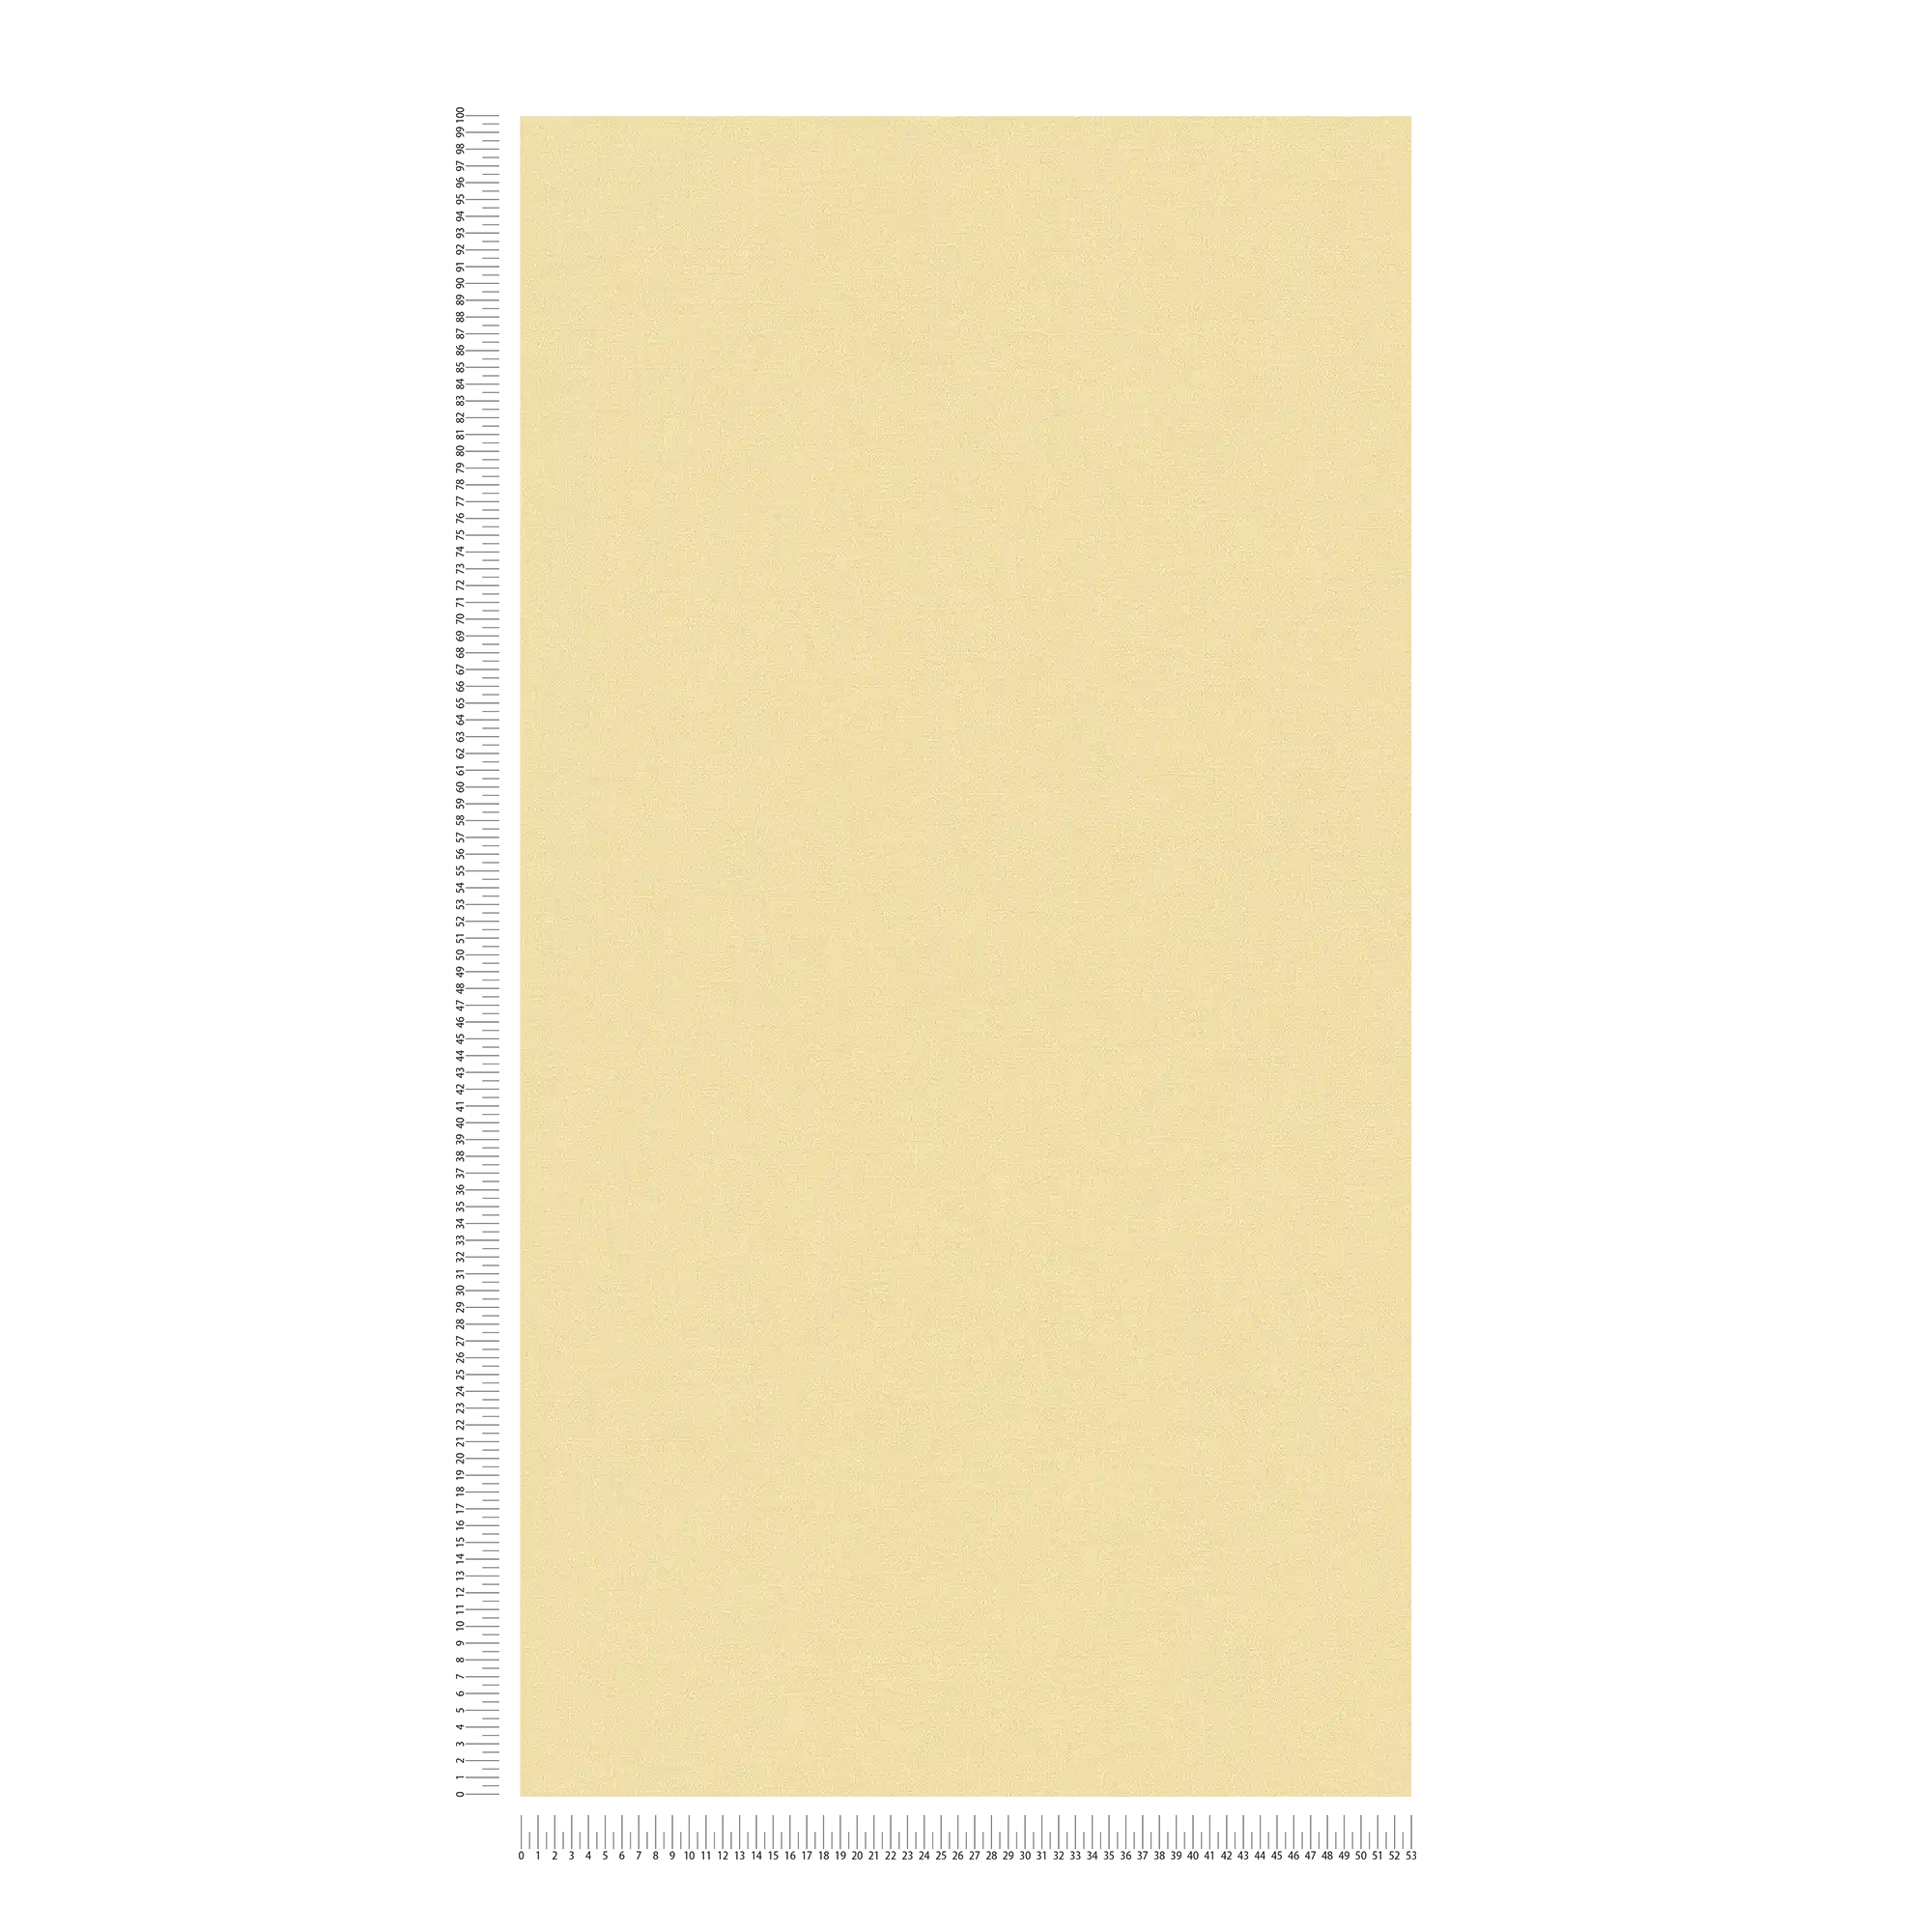             Papel pintado liso no tejido en un tono cálido - amarillo
        